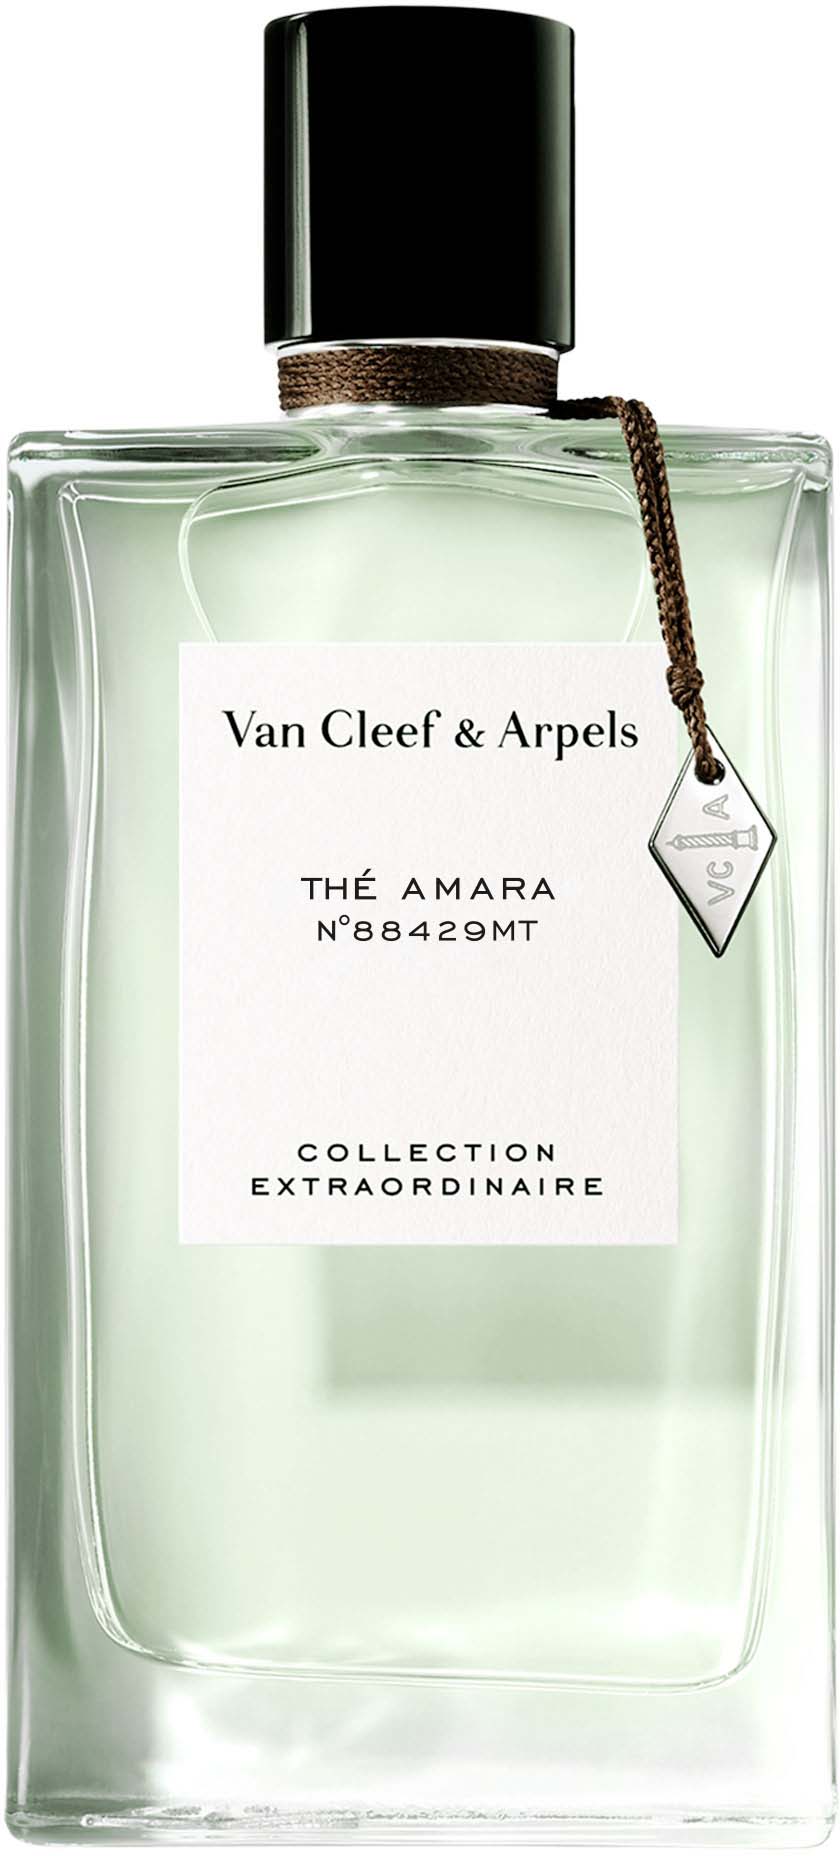 van cleef & arpels collection extraordinaire - the amara woda perfumowana 75 ml   